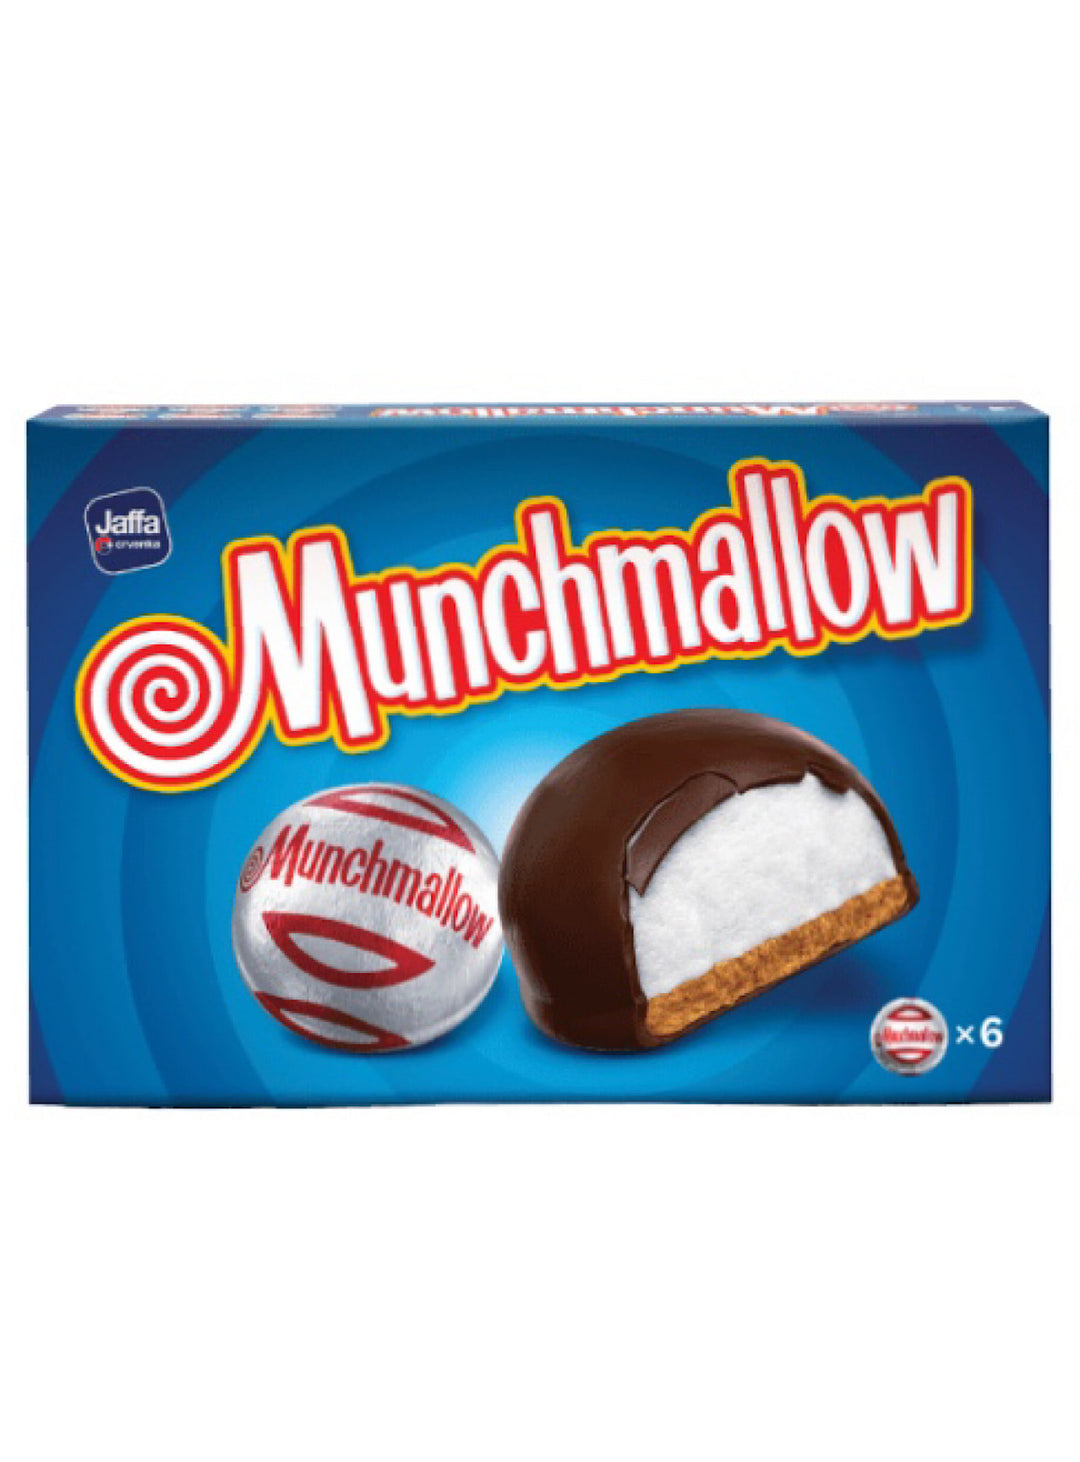 Munchmallow Marshmallow Cookies - Jaffa - 105g